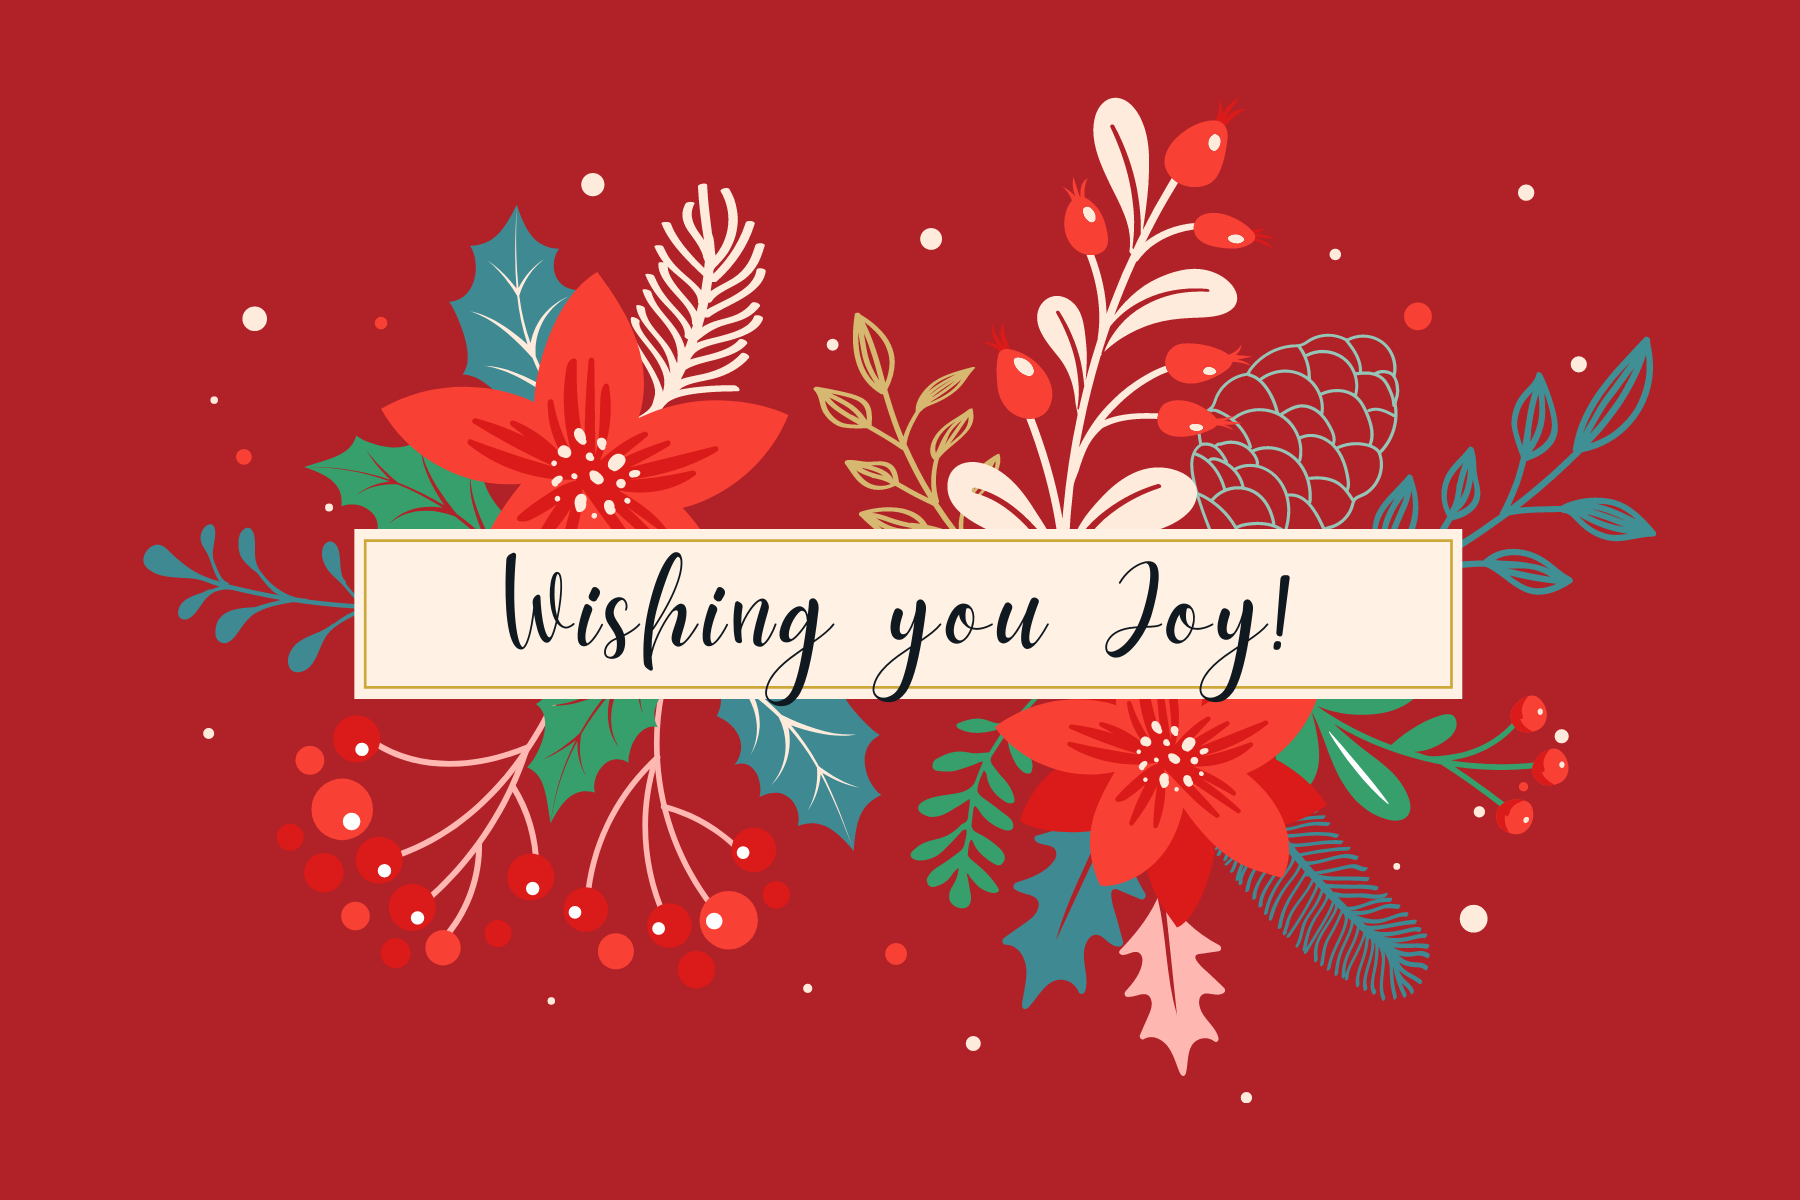 Wishing you JOY this holiday season!